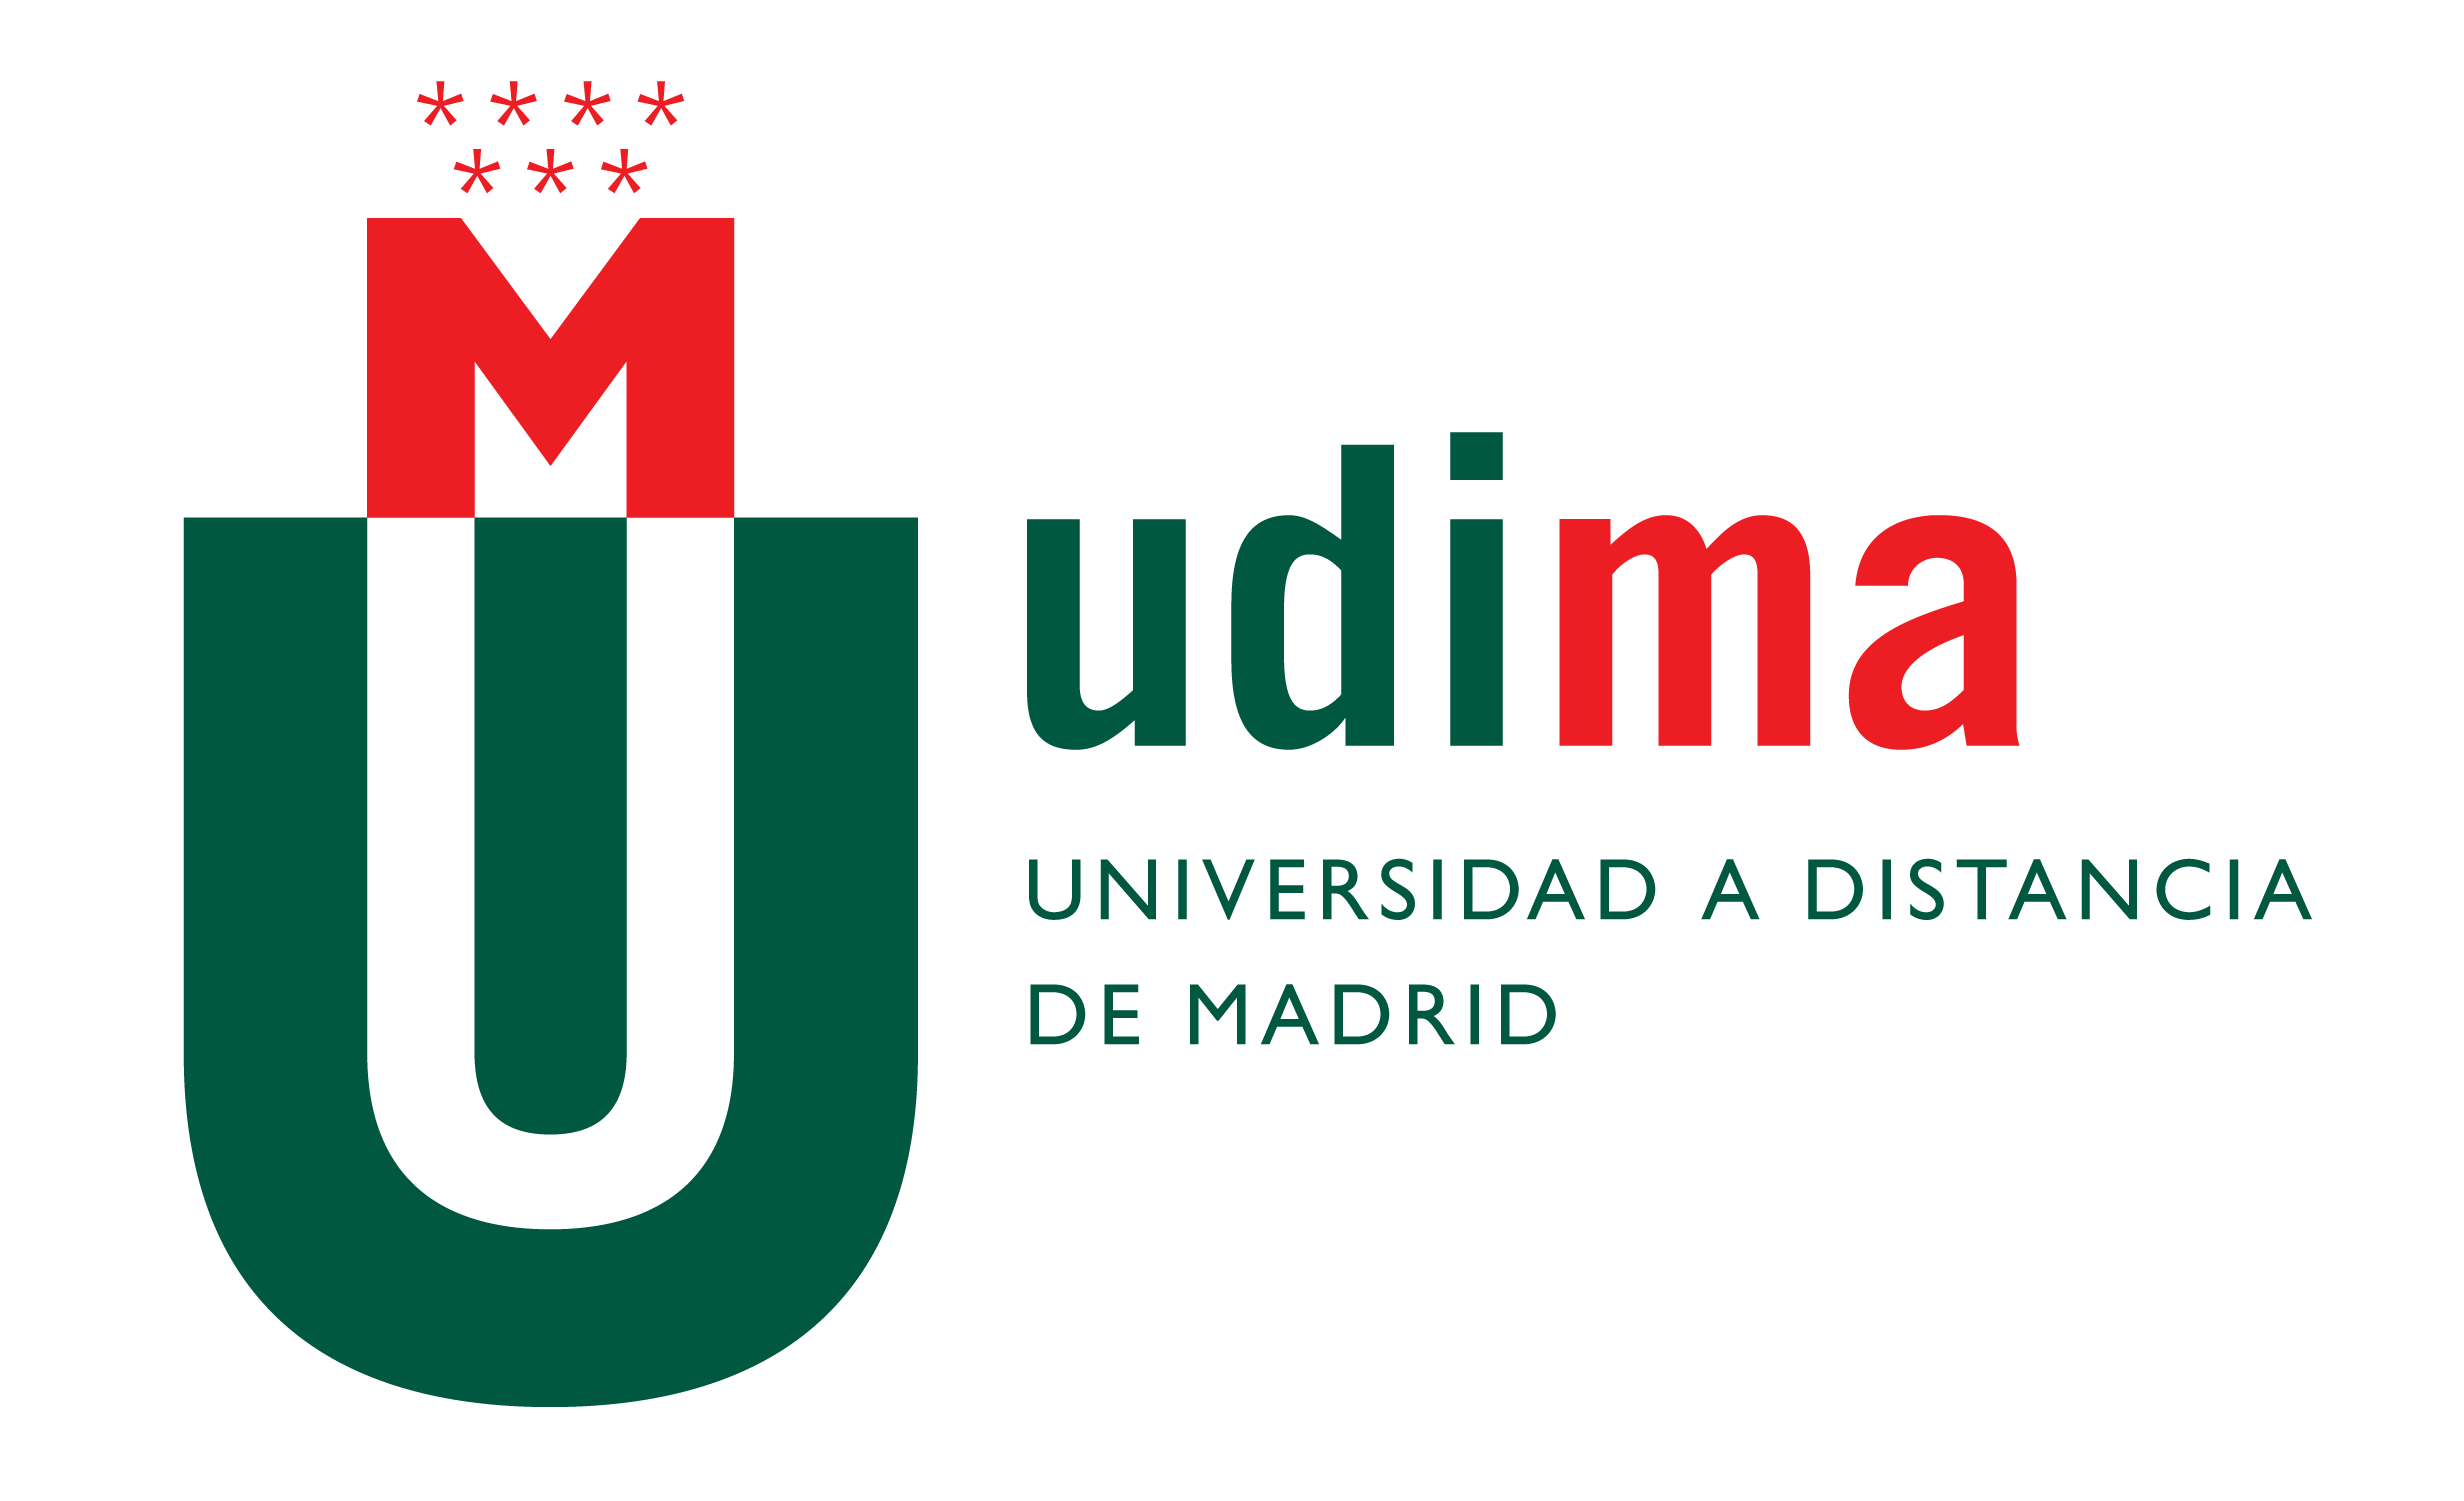 logo-udima-horizontal-COLOR